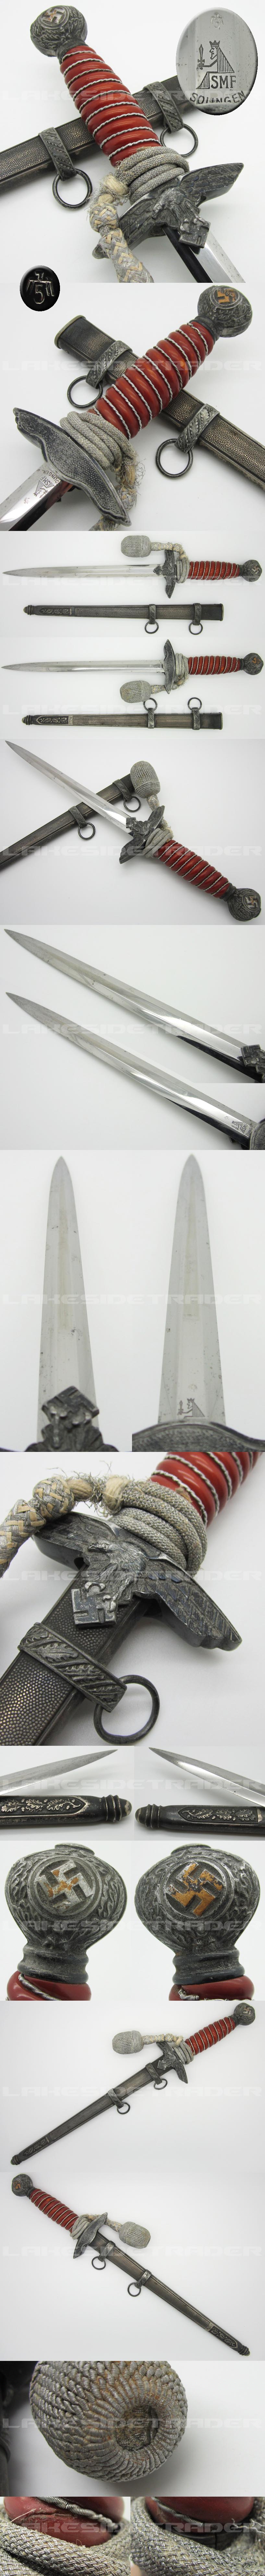 2nd Model Luftwaffe Dagger by SMF